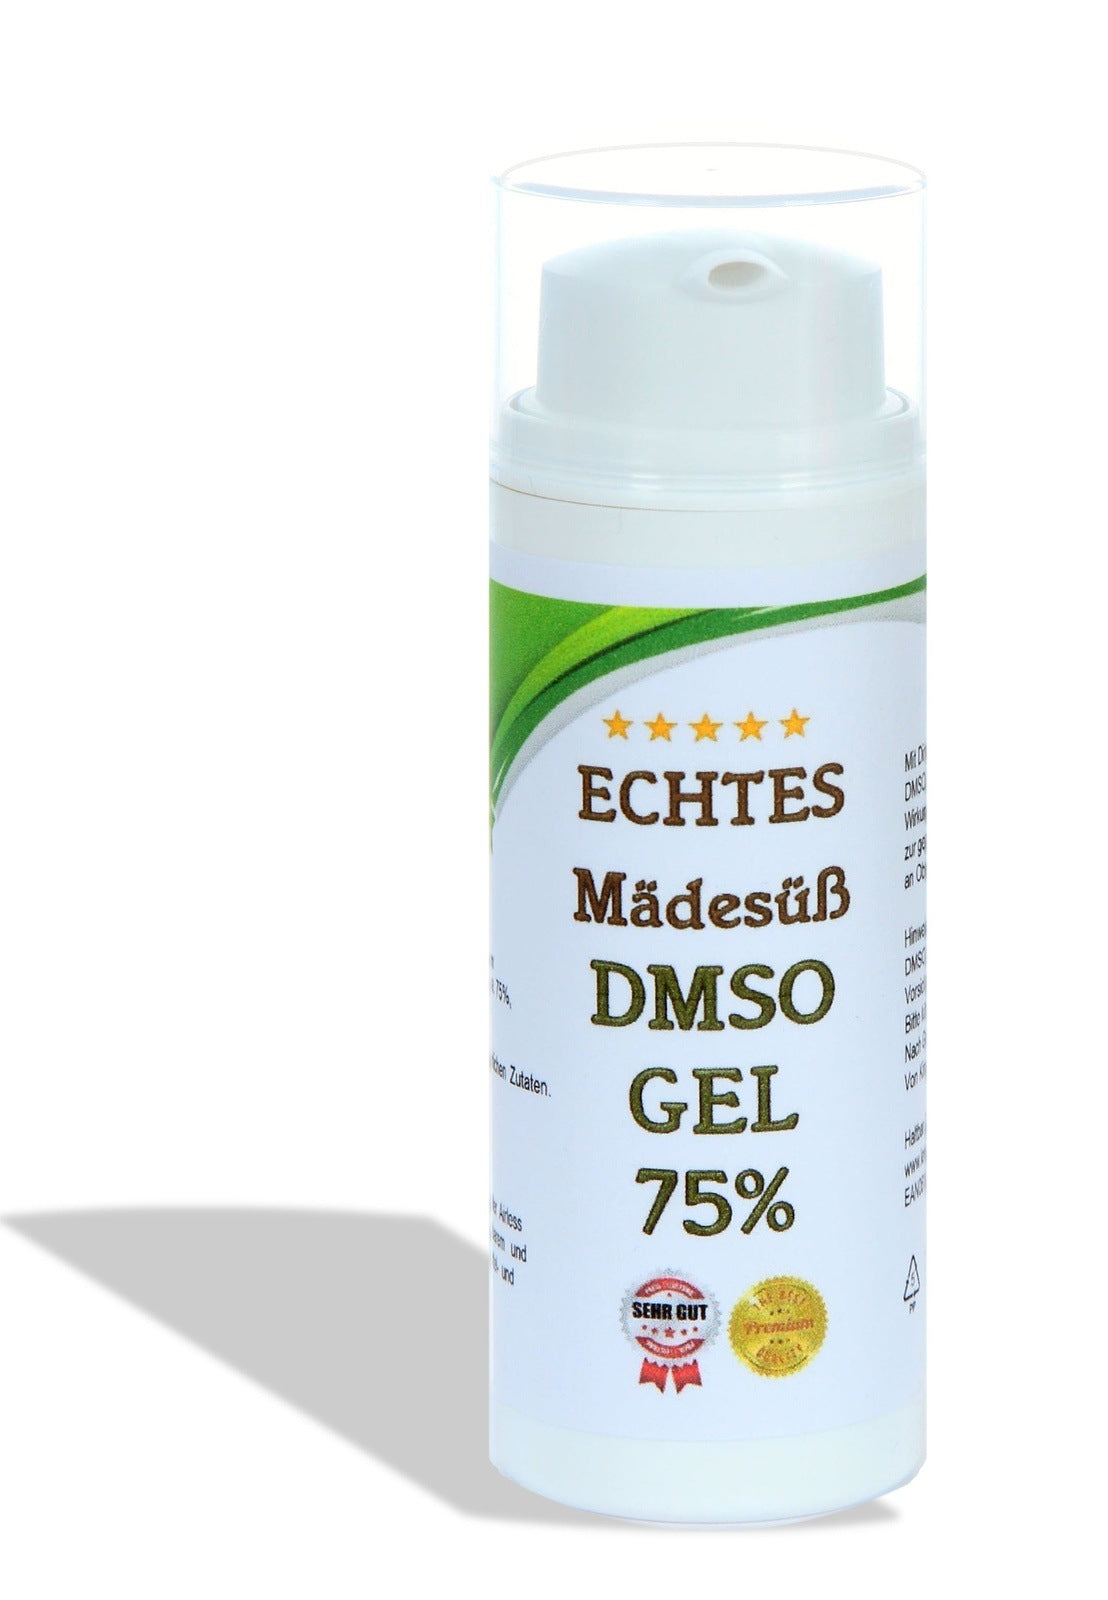 Leivys DMSO Gel - with meadowsweet extract